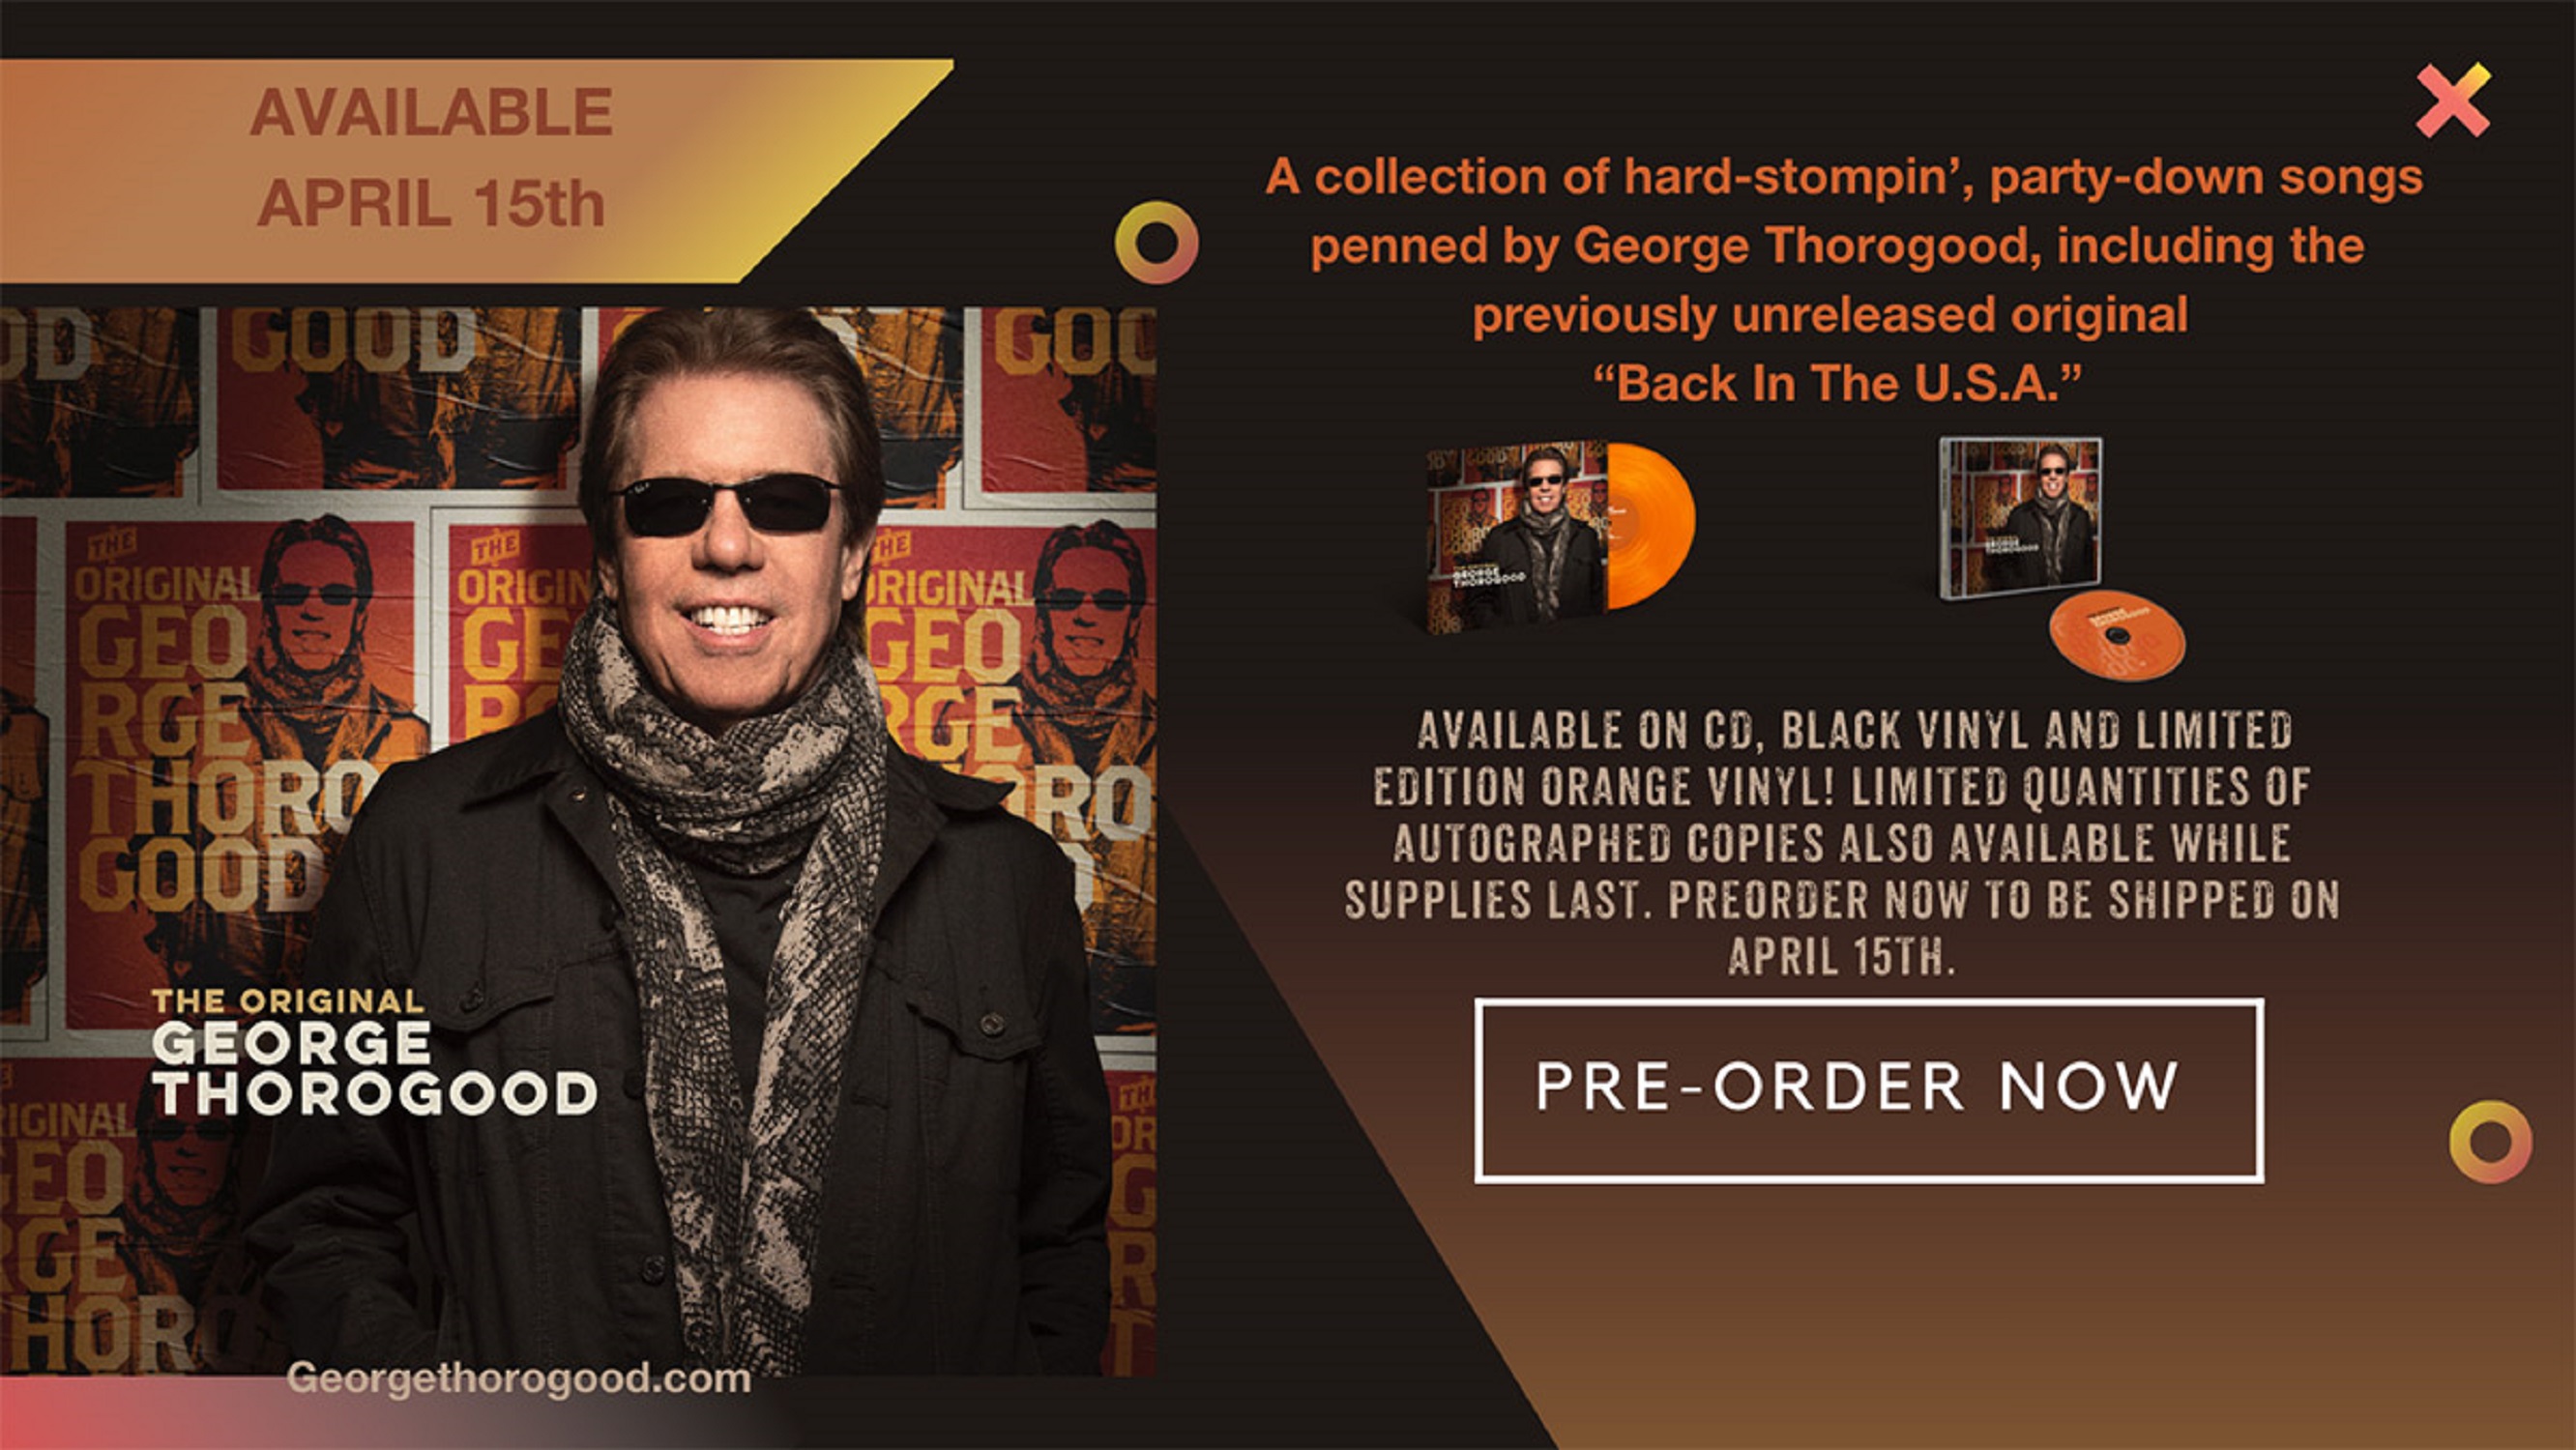 GEORGE THOROGOOD'S SONGCRAFT SHINES ON THE ORIGINAL GEORGE THOROGOOD